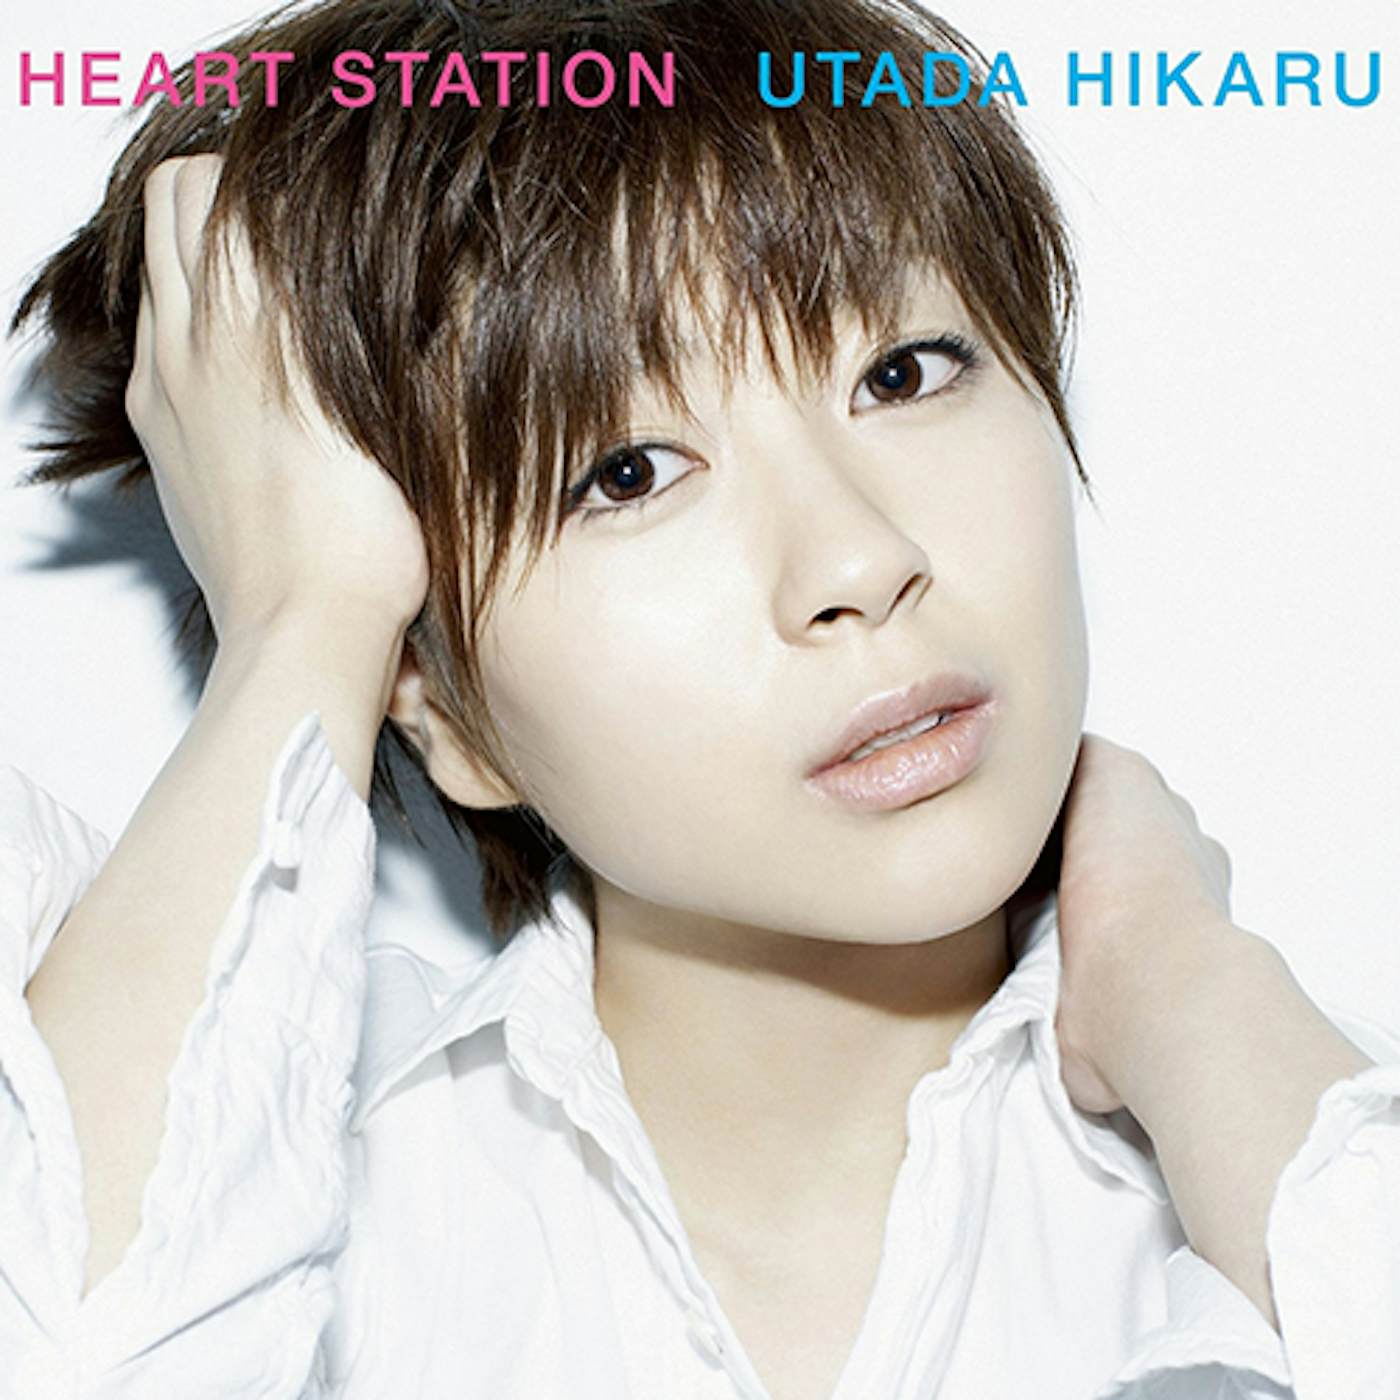 Hikaru Utada Heart Station  Japanese Import  Remaste Vinyl Record